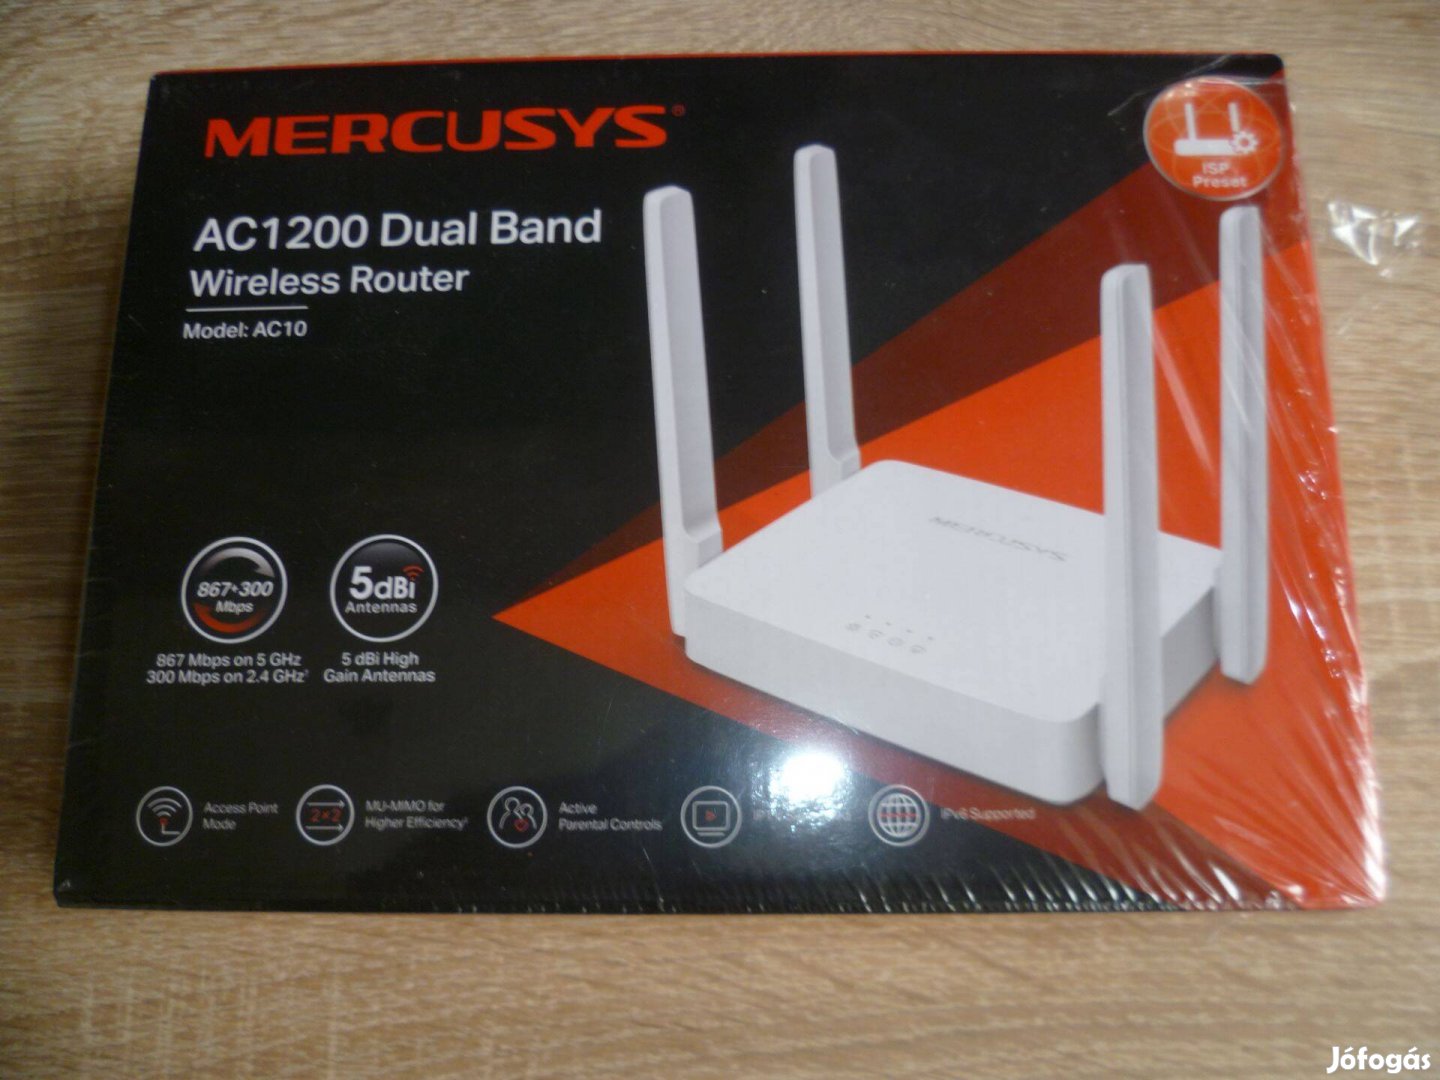 Mercusys AC1200 Dual Band Wireless Router